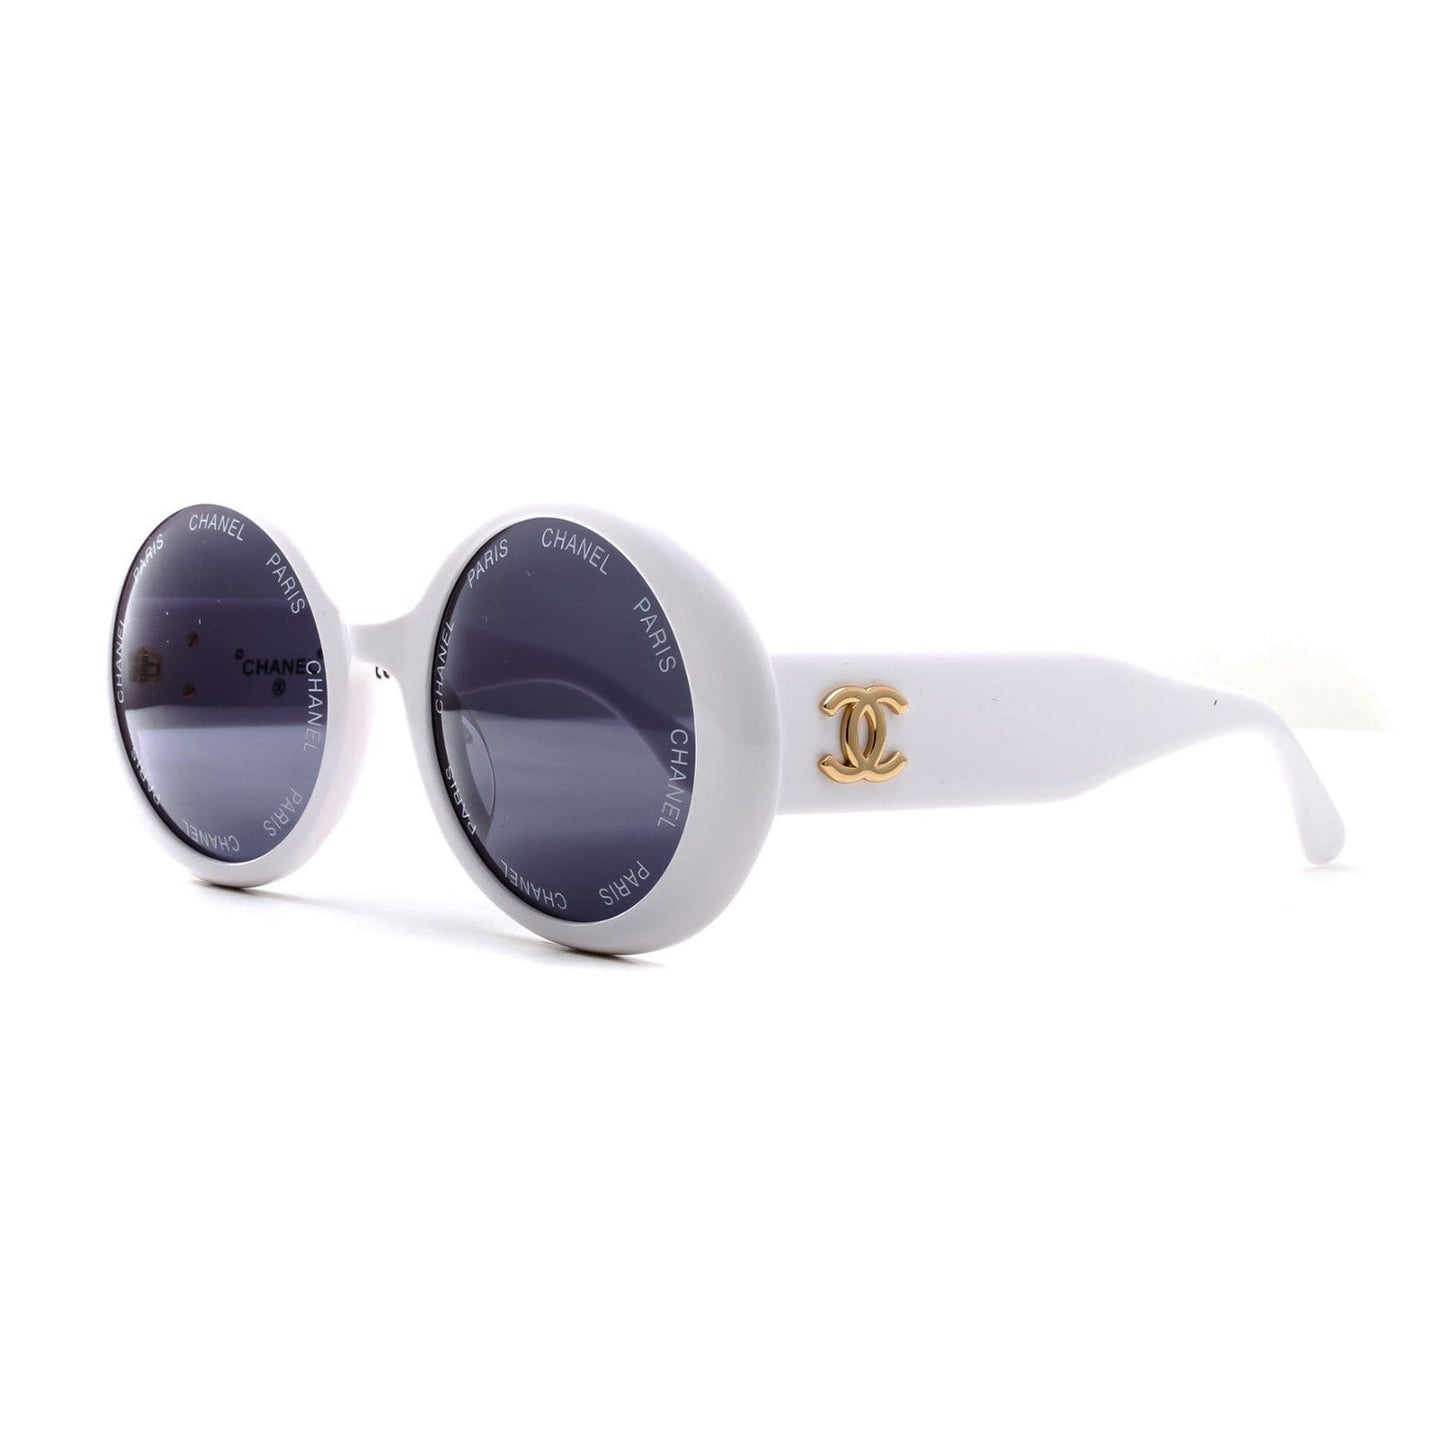 vintage chanel sunglasses round metal